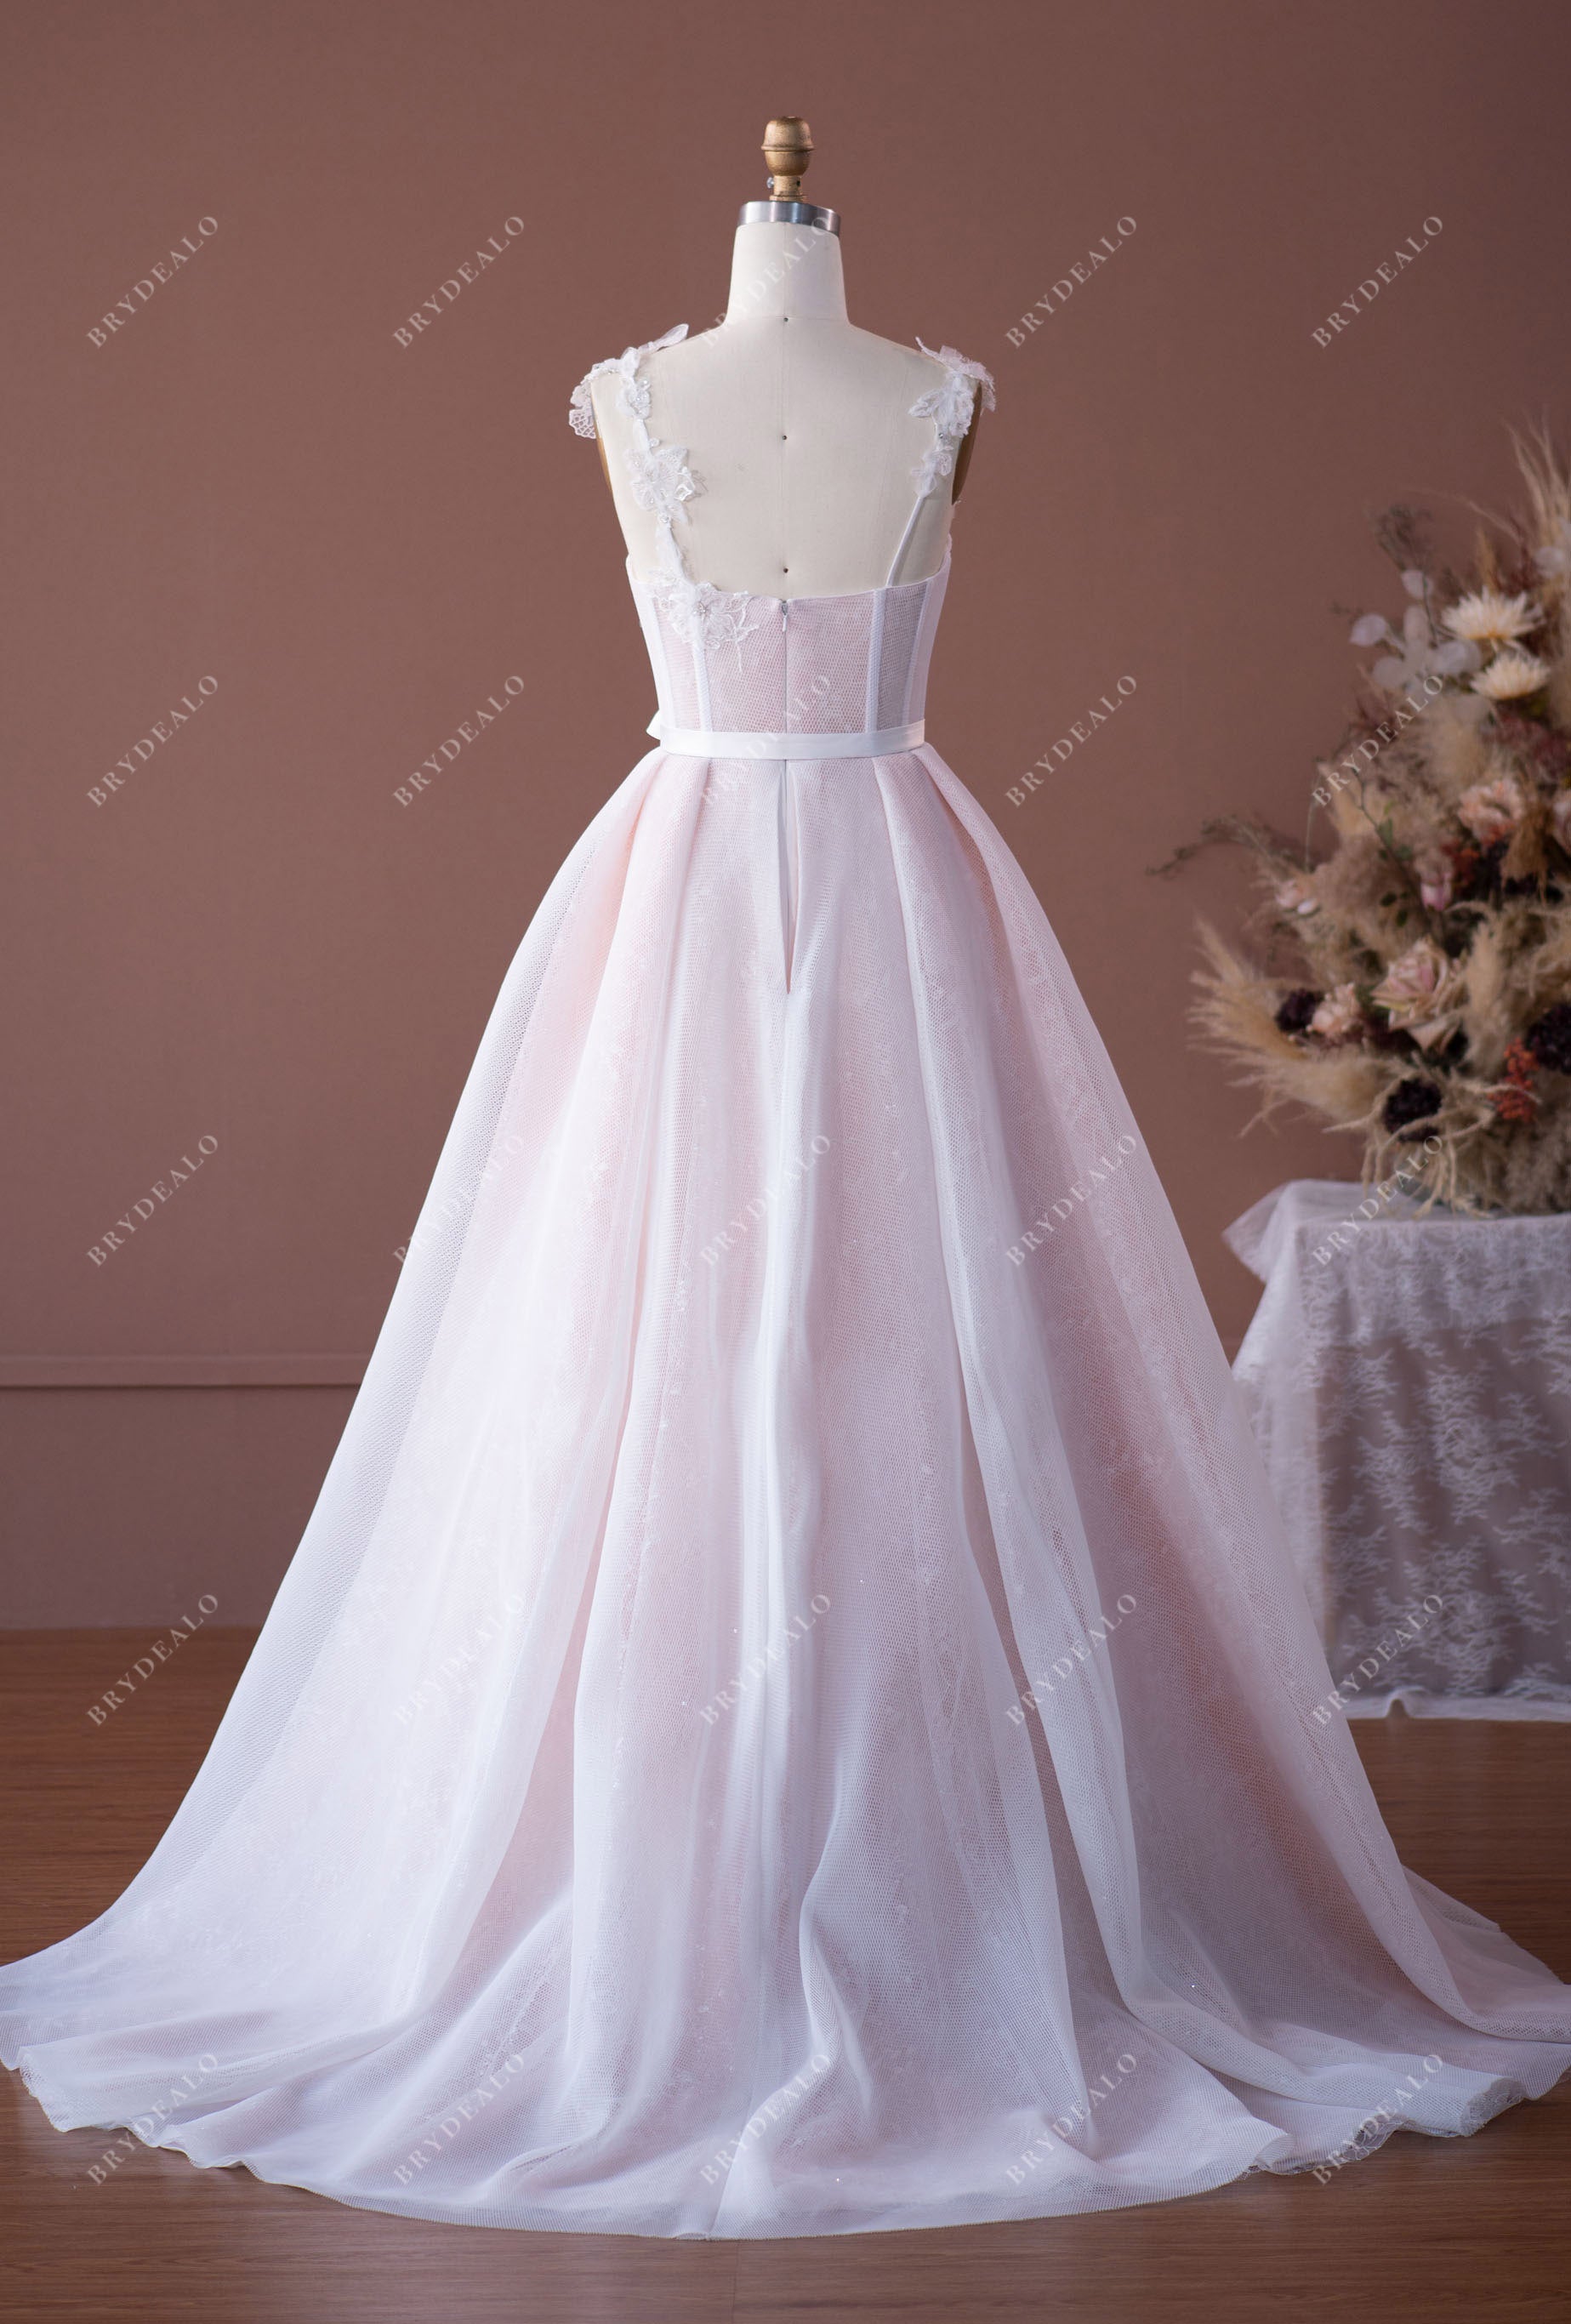 Pinkish Straps Boned Corset Bridal Gown